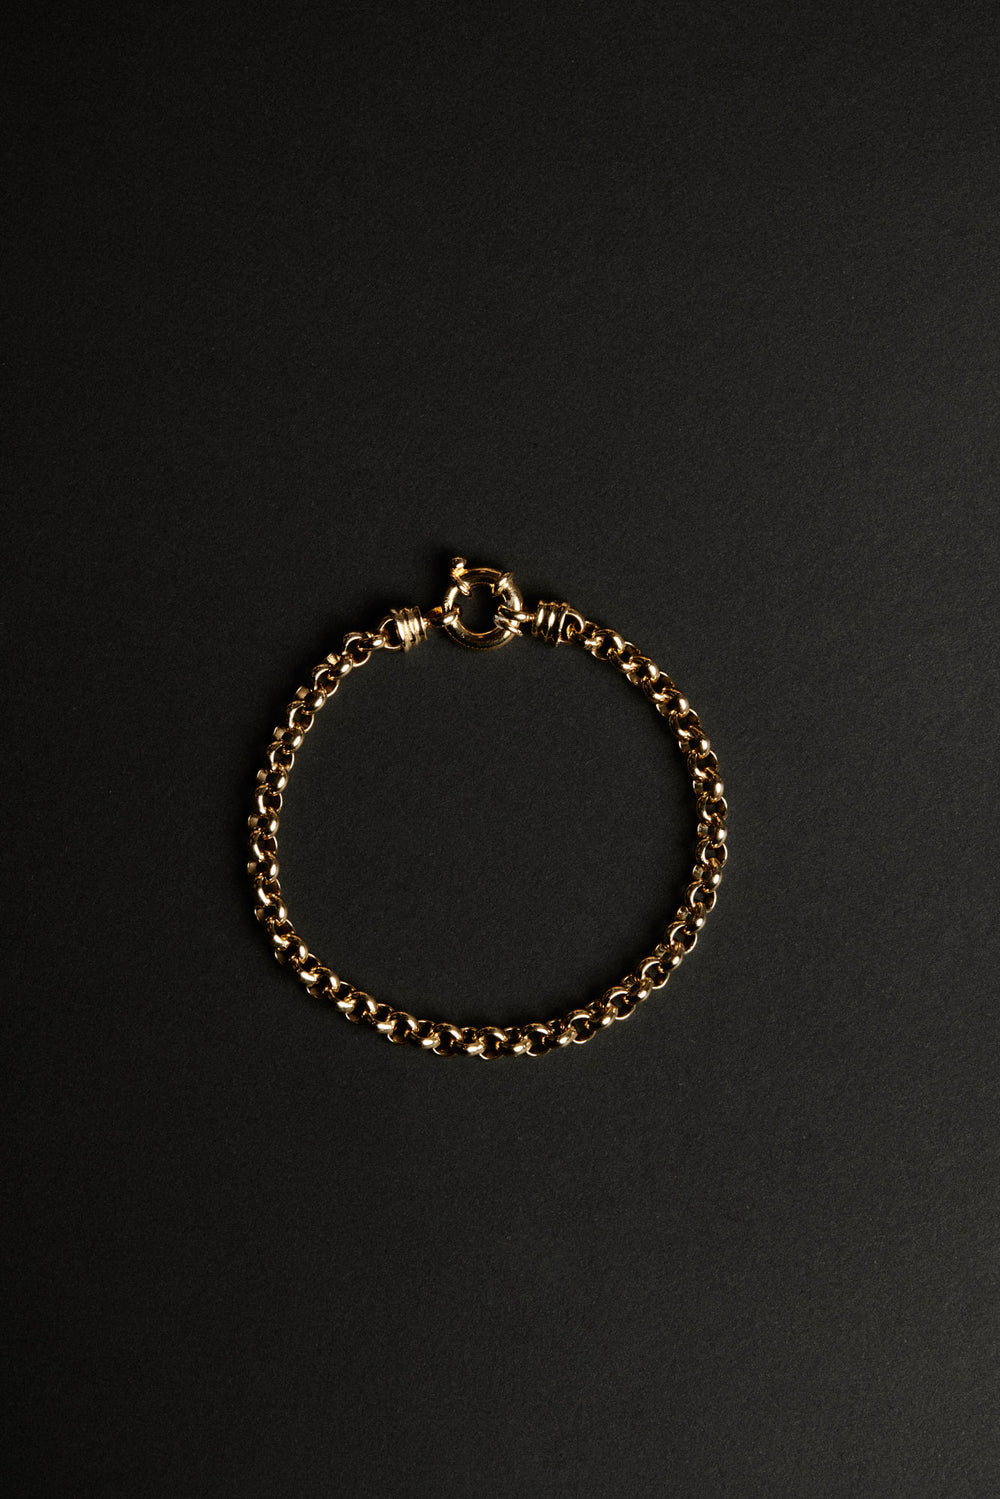 Medium Chateau Bracelet | 9K White Gold| Natasha Schweitzer